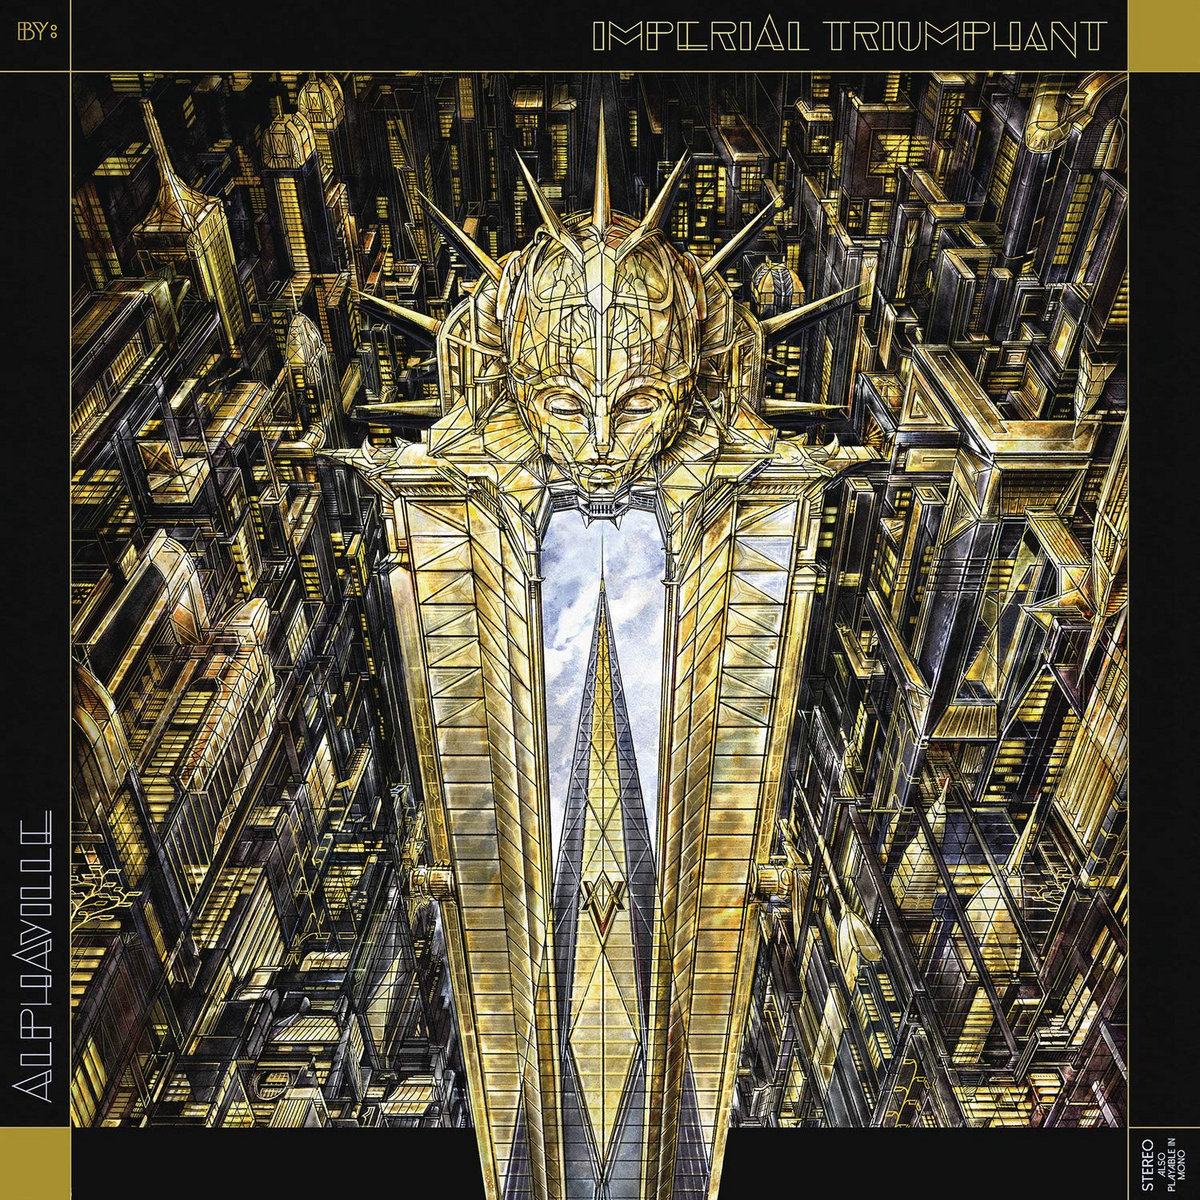 Imperial Triumphant - "Alphaville" Limited Edition - 2020